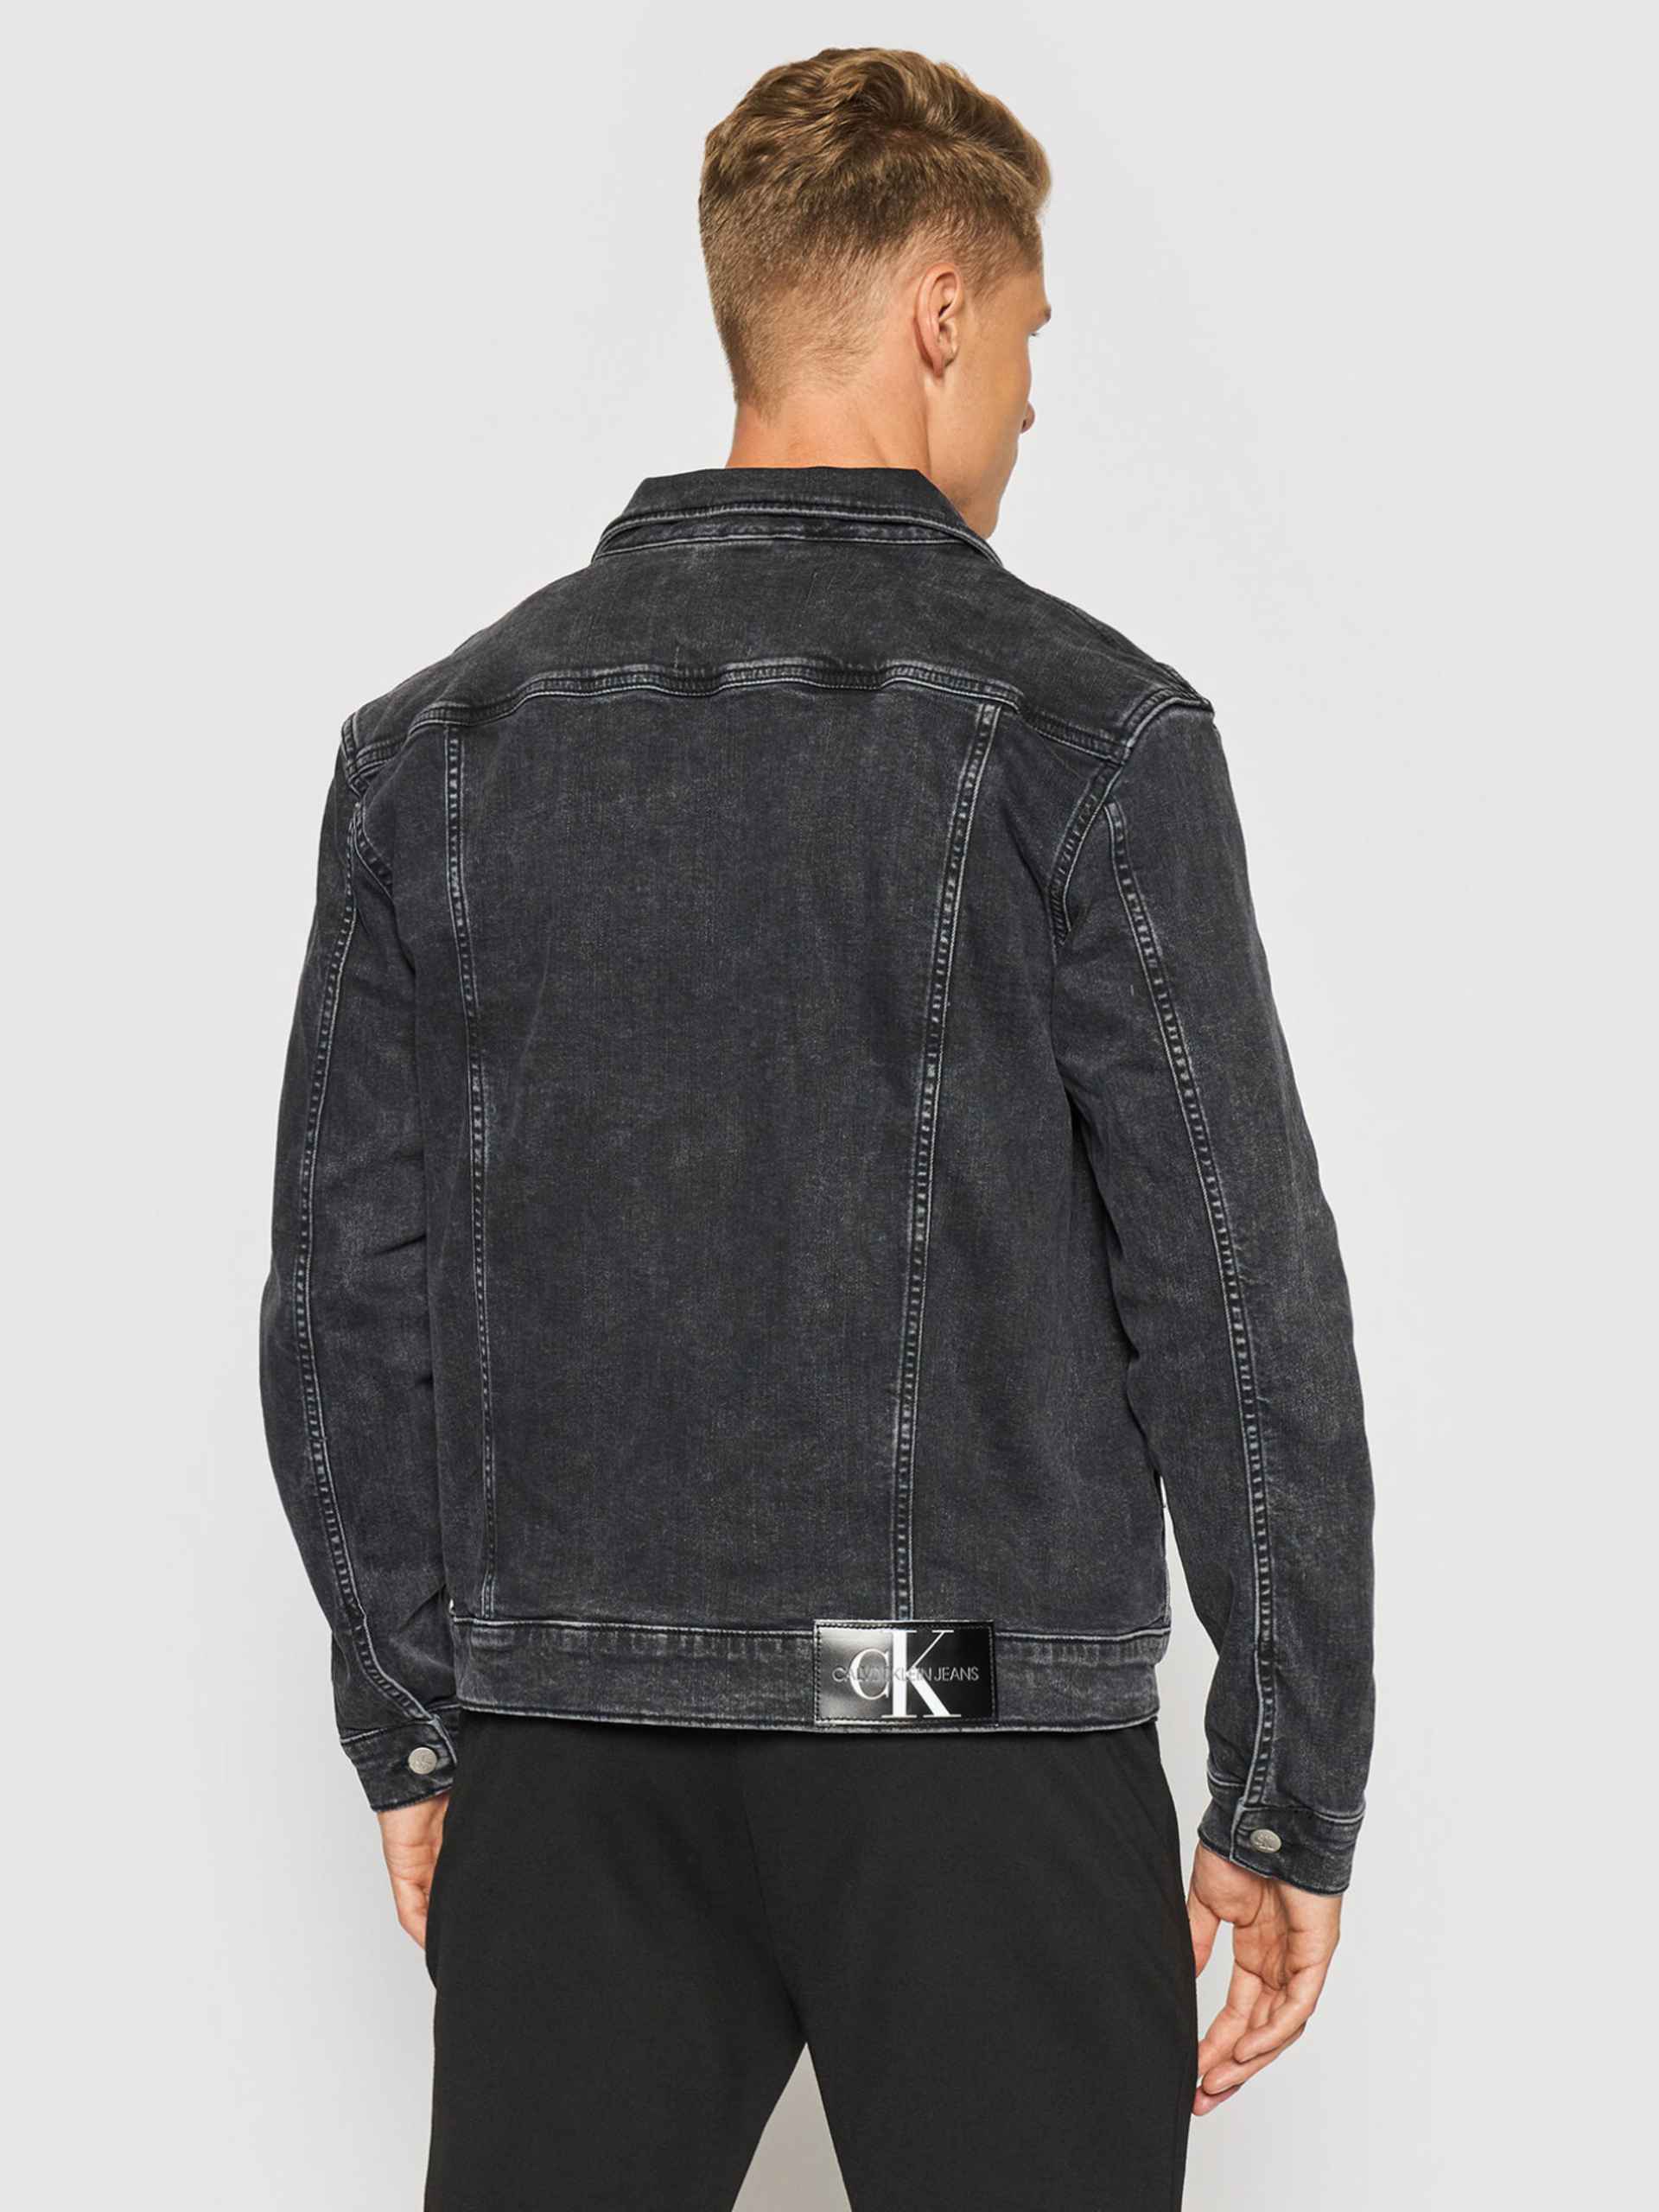 Calvin Klein pánská černá džínová bunda - XL (1BY)